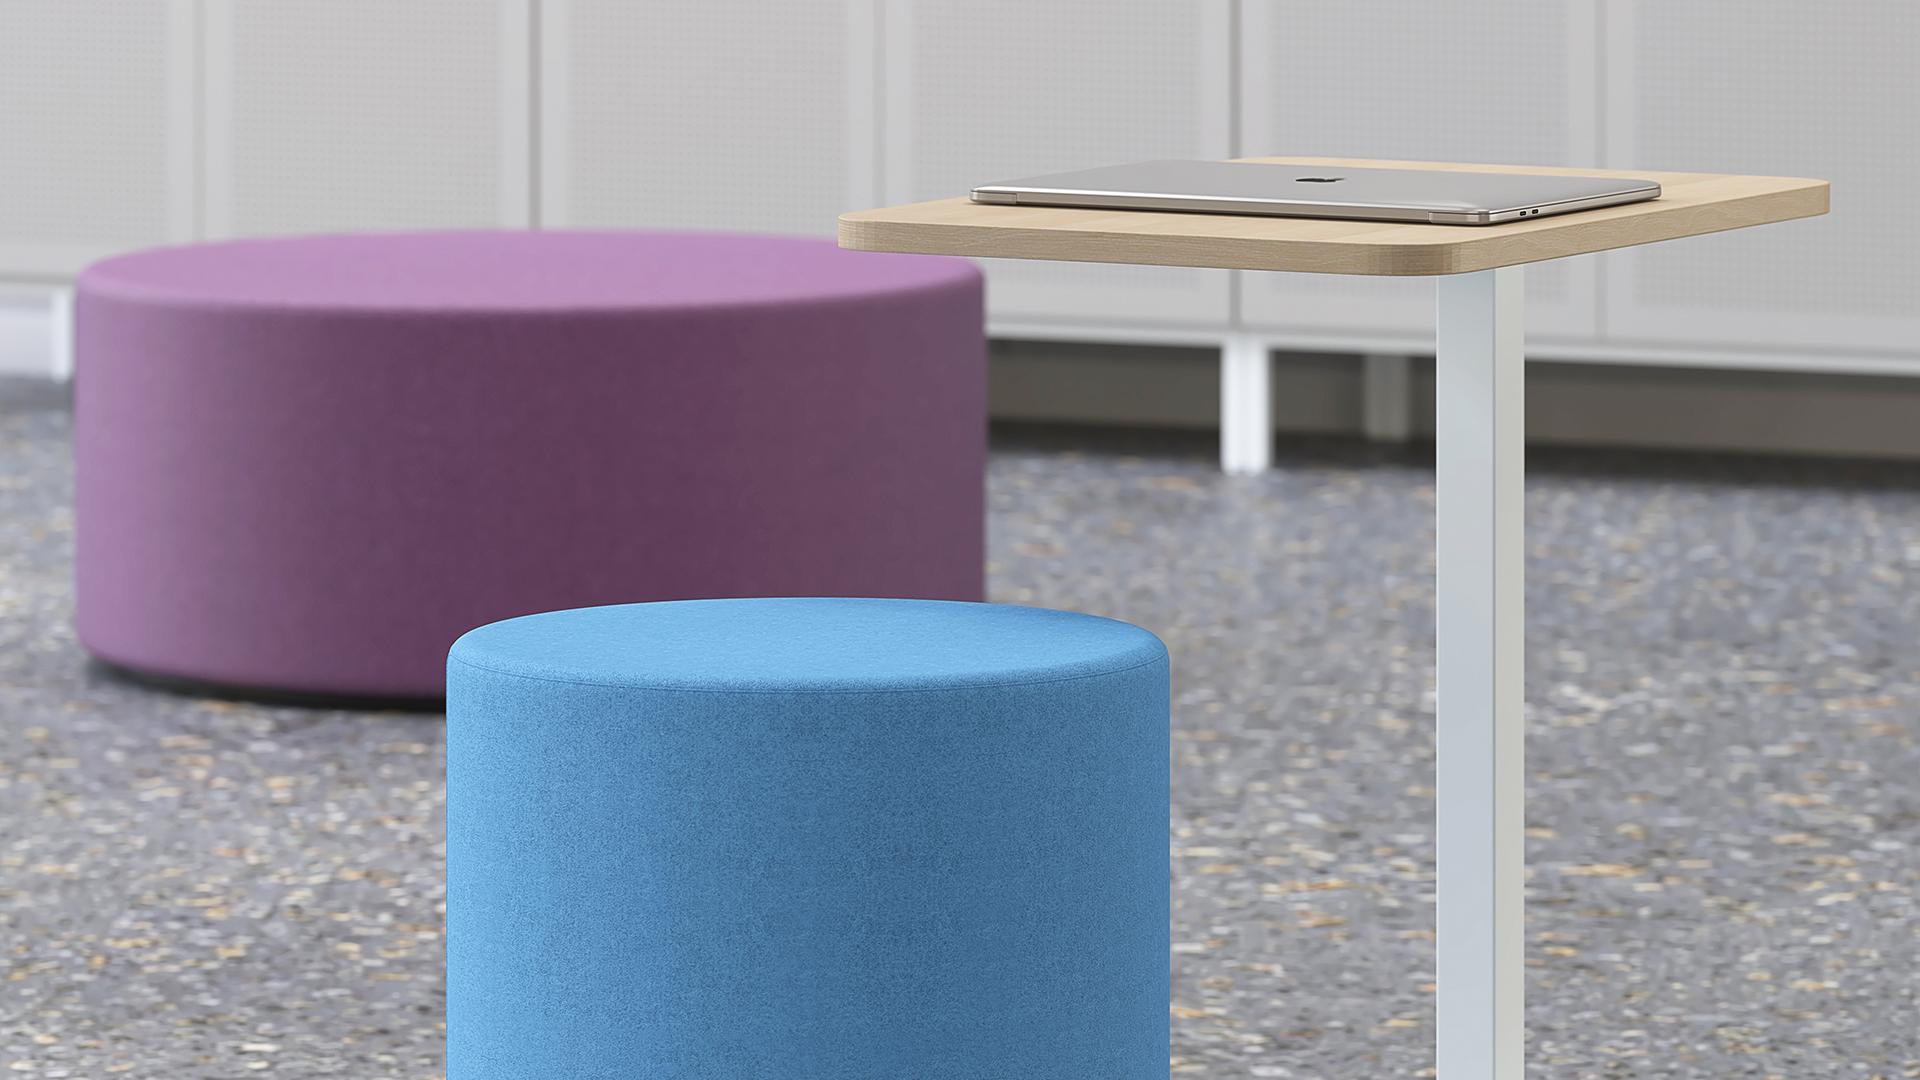 Giro fabric soft seating poufs with Mobi coffee table